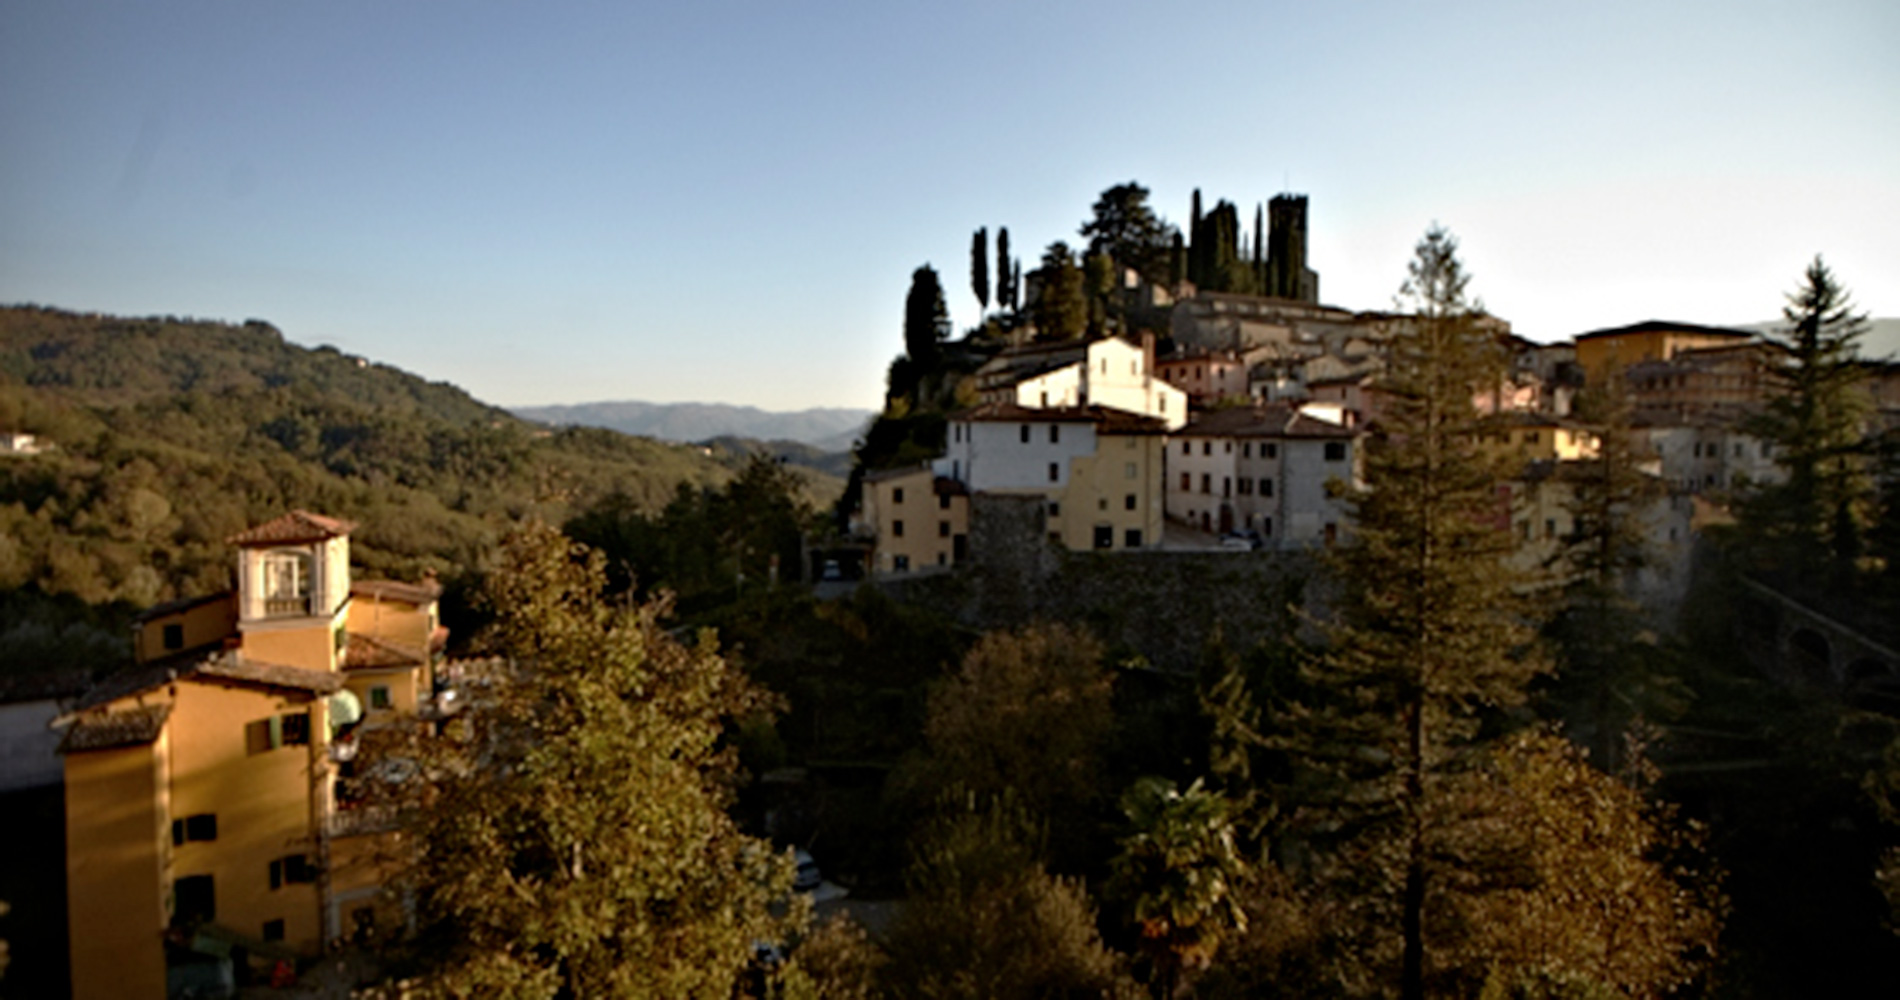 Foto vista Villa gherardi